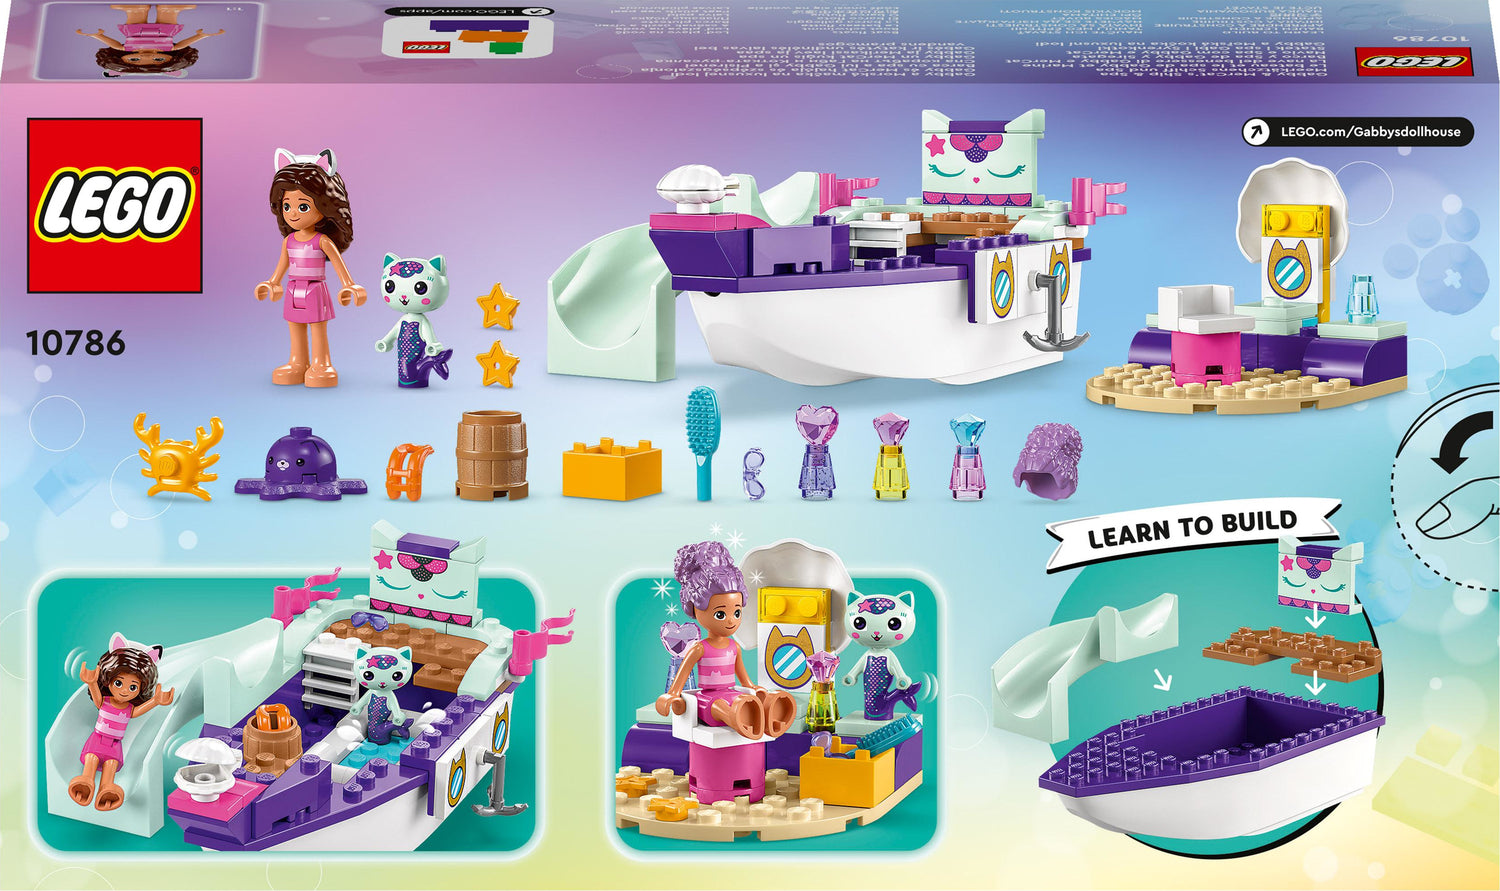 About LEGO® Gabby's Dollhouse